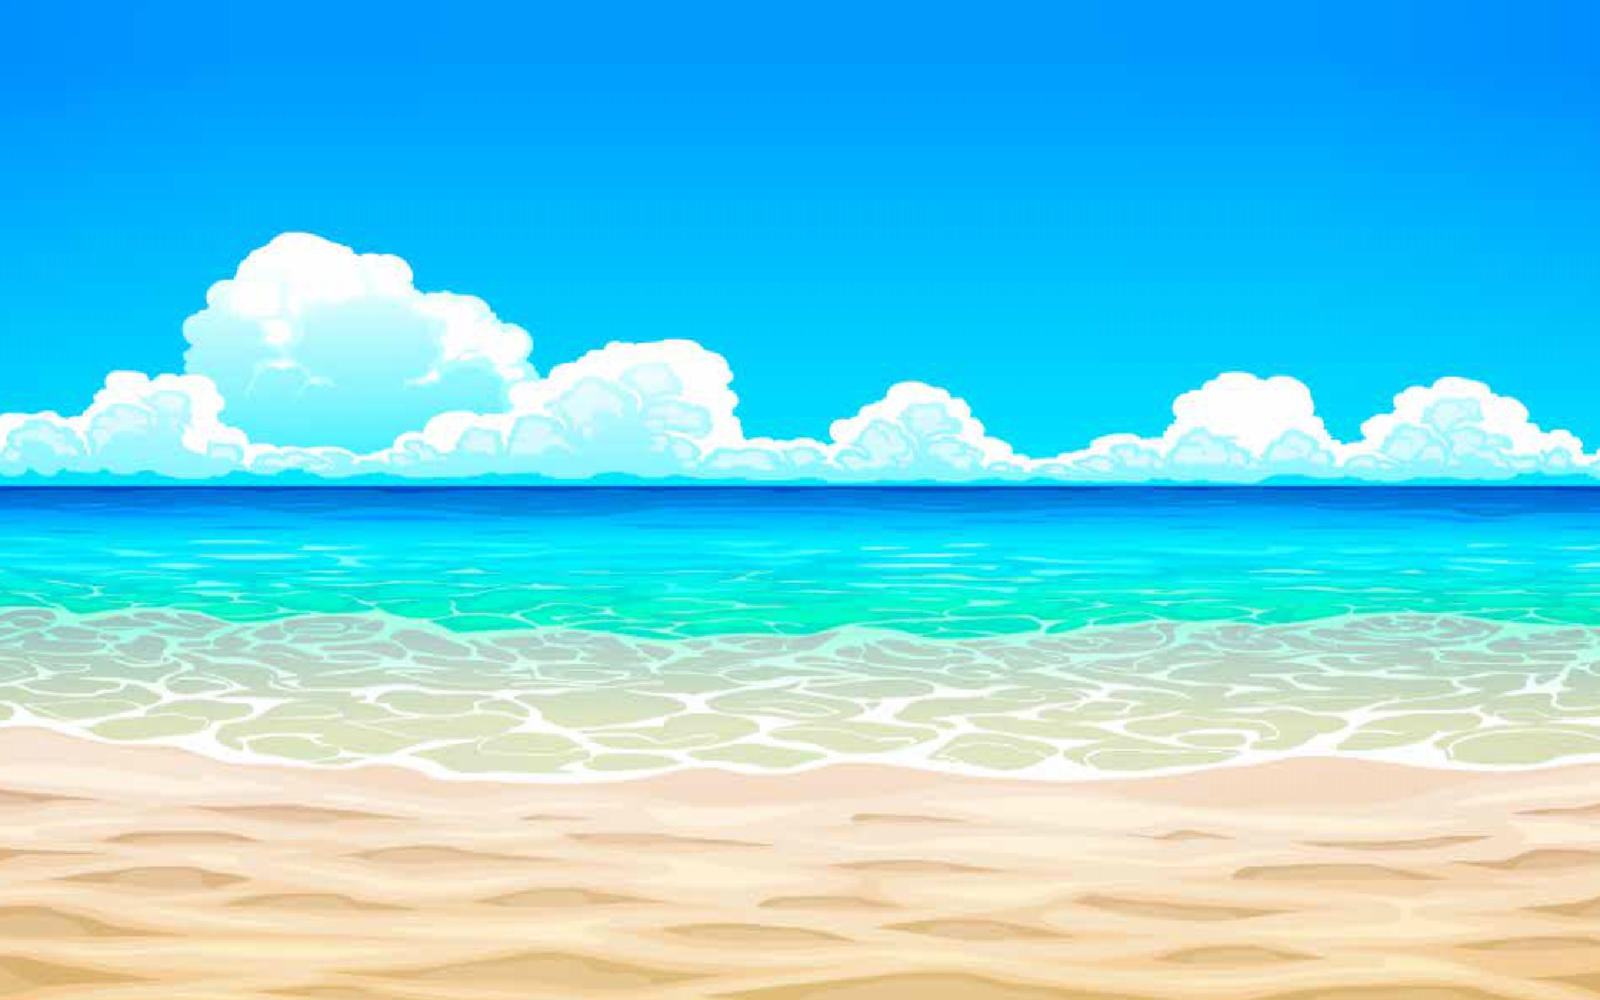 Gacha Life Beach Background by Chiquiyo on DeviantArt